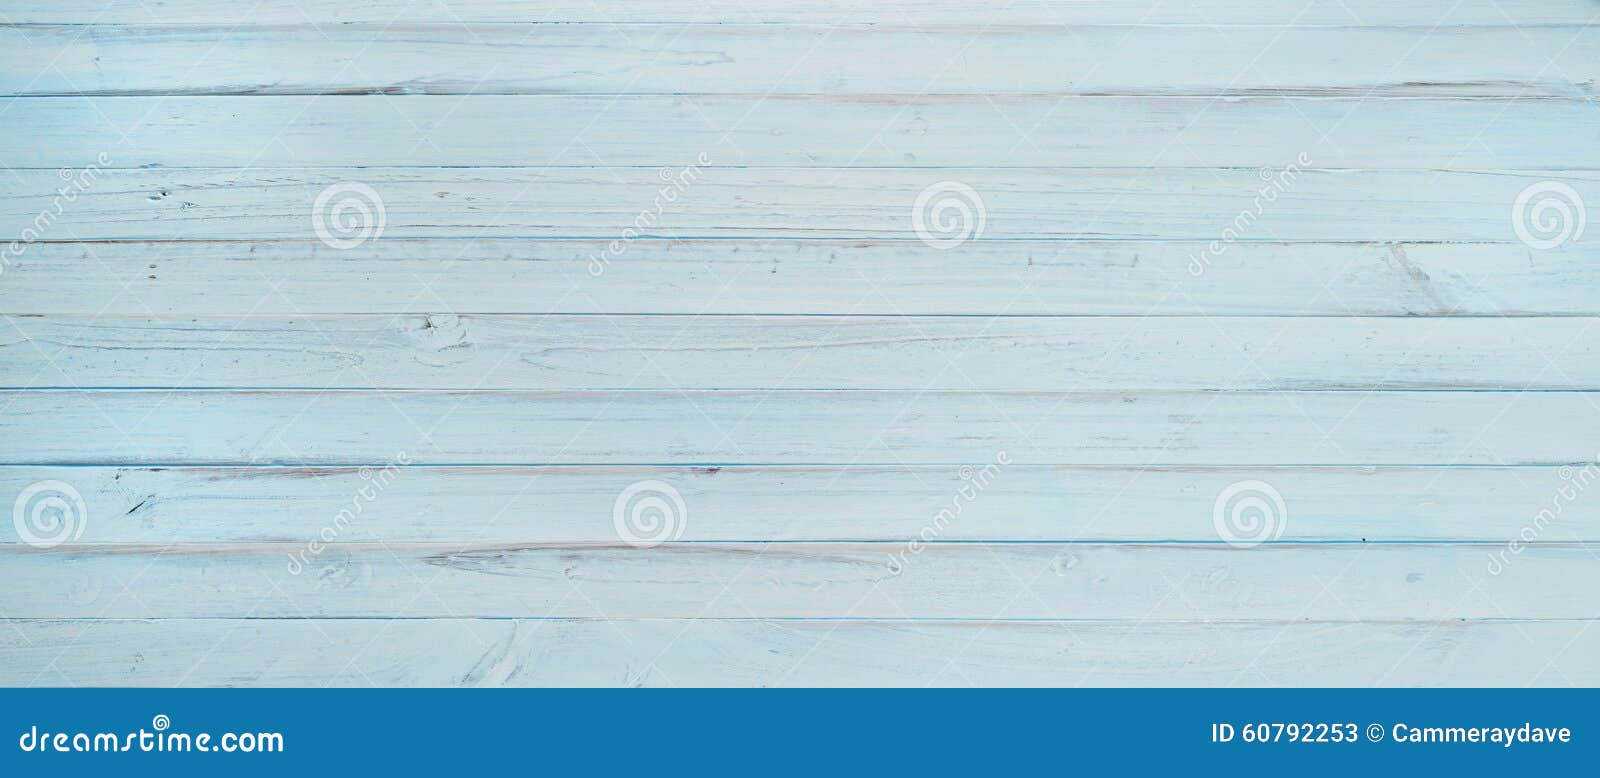 blue wood background banner